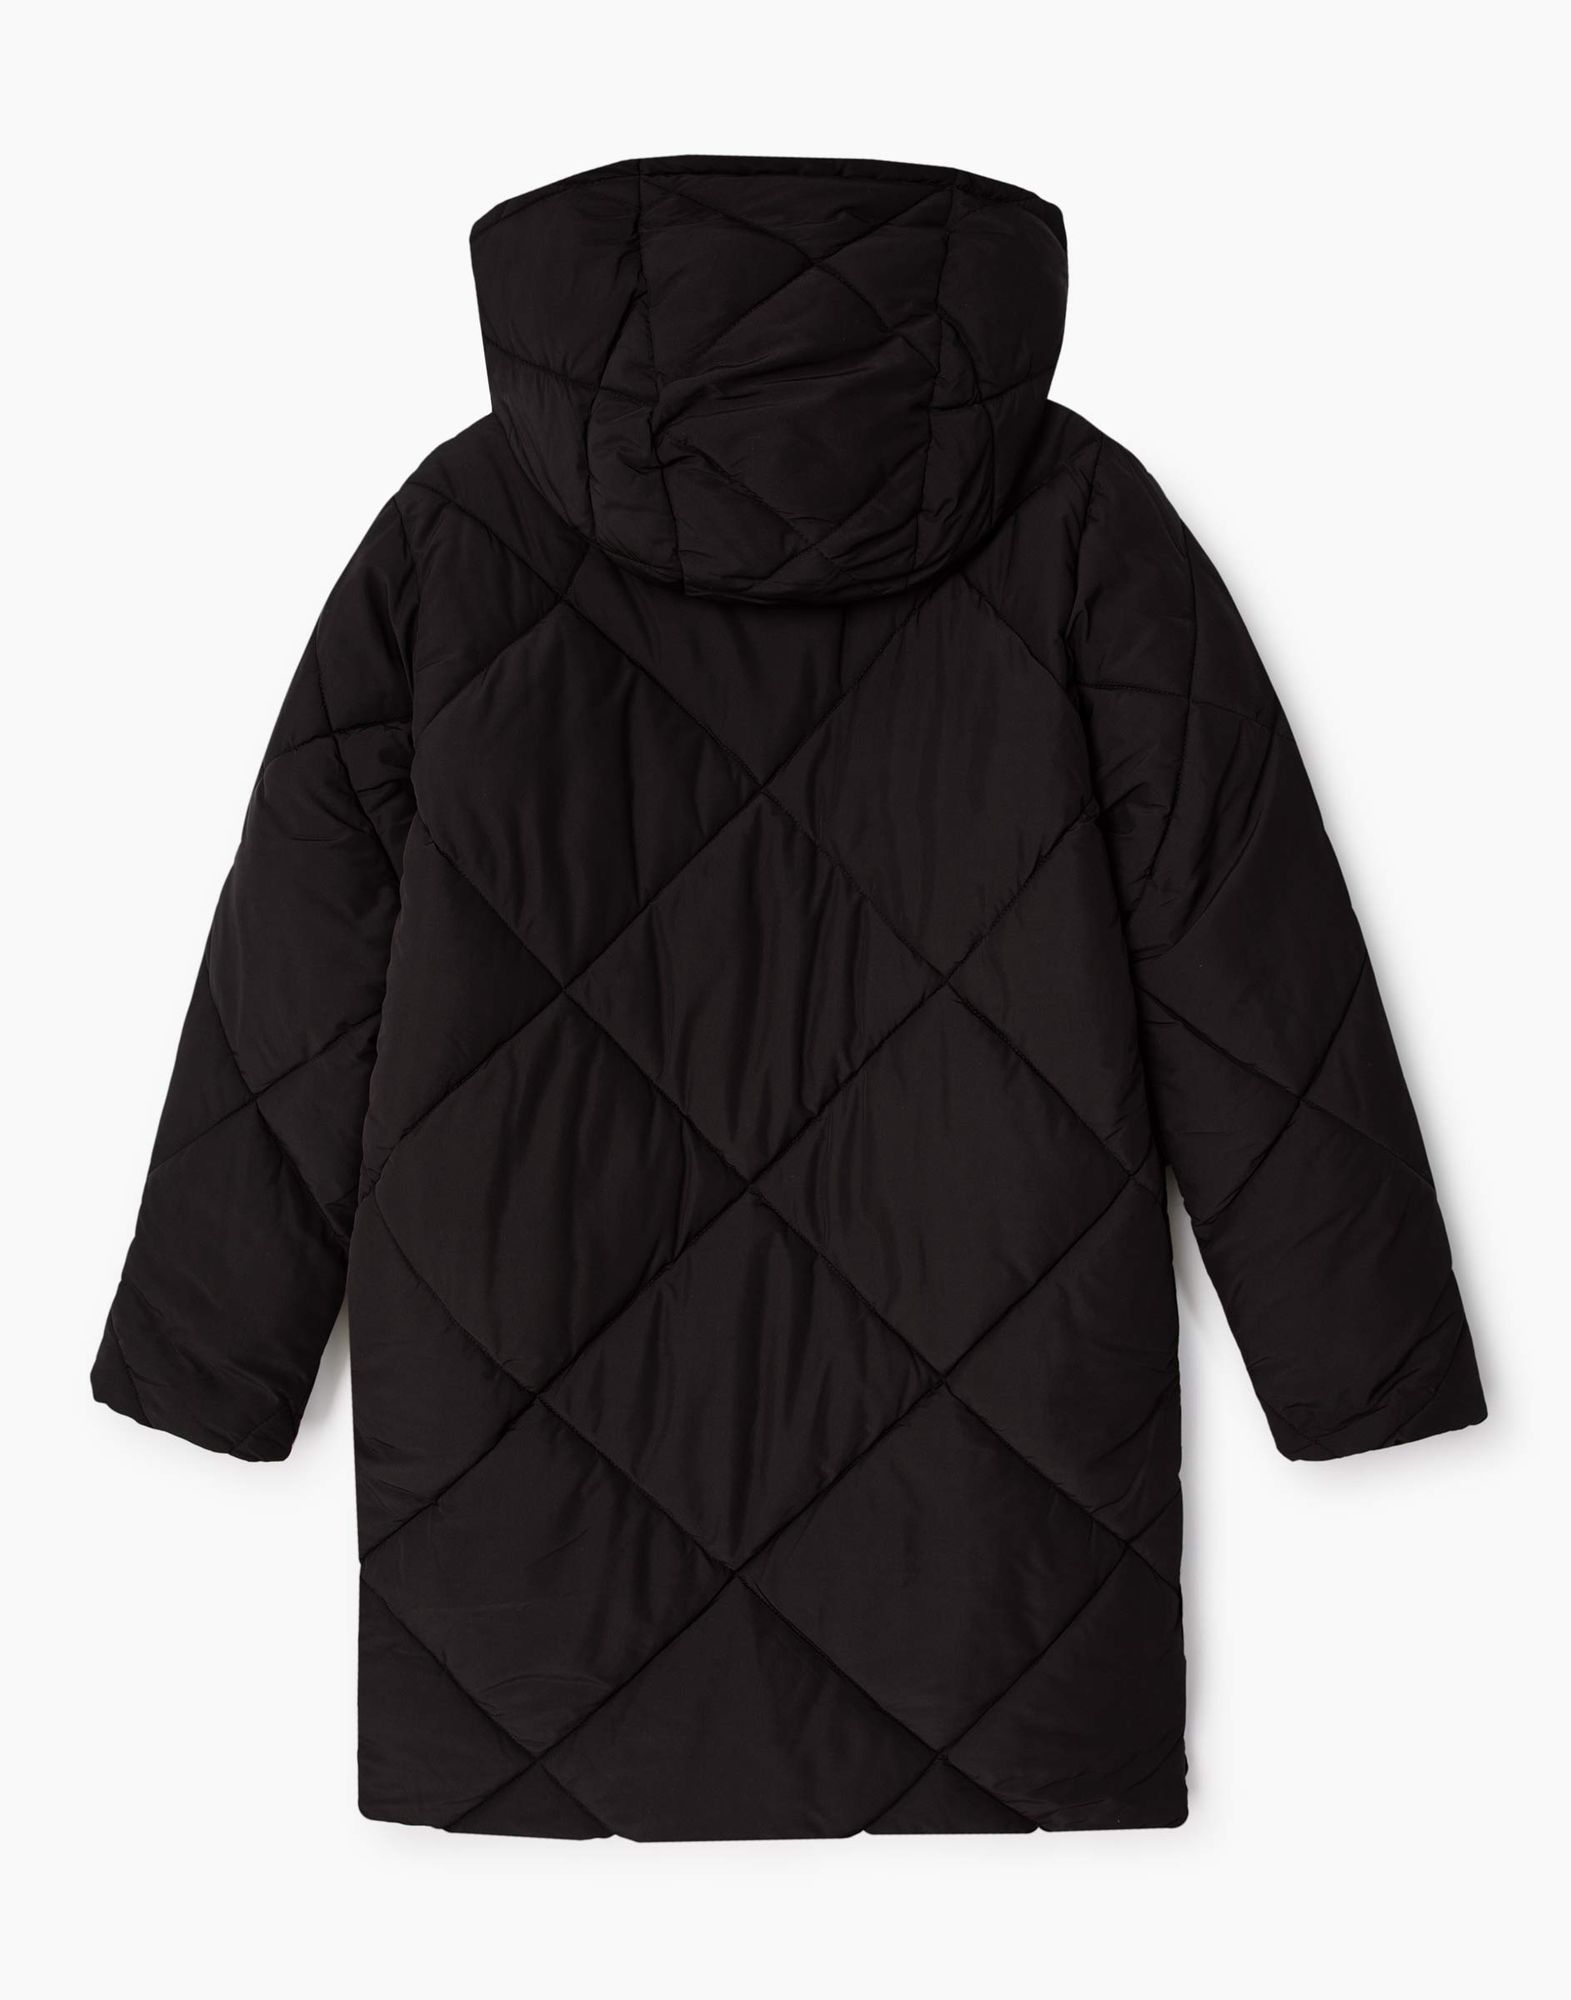 Чёрная утеплённая куртка на пуговицах для девочек-2